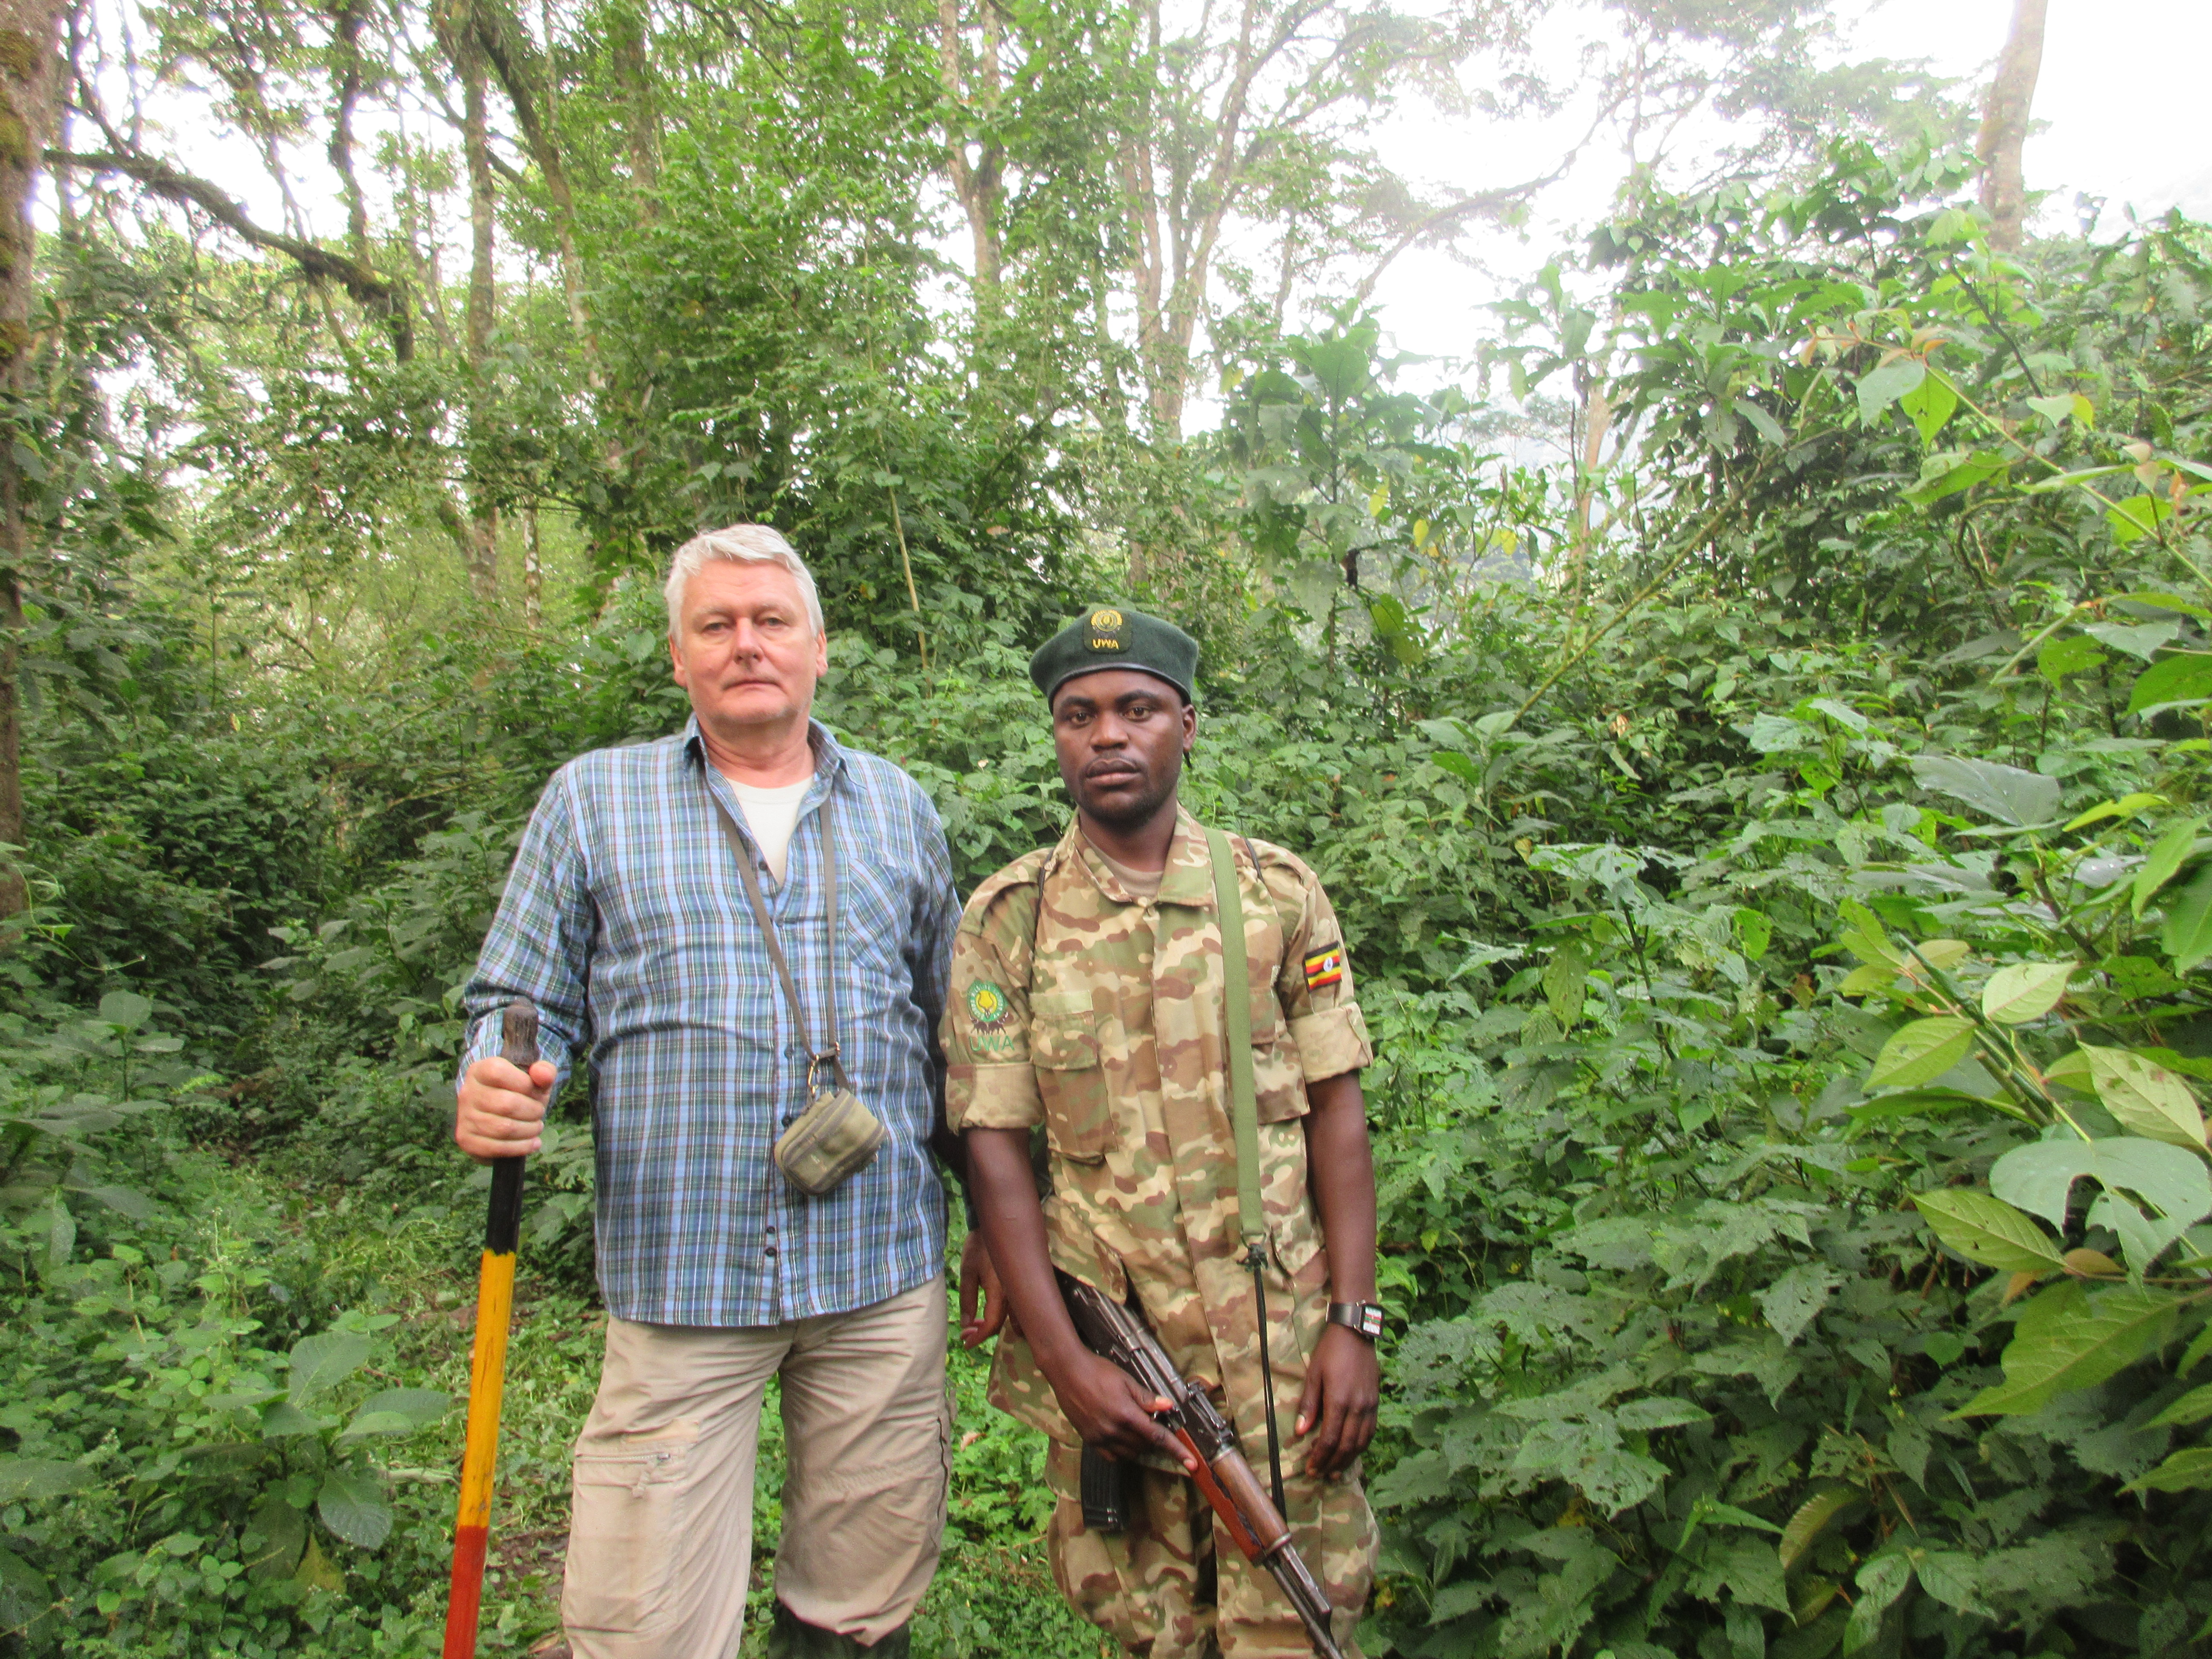 A local tour guide in Uganda